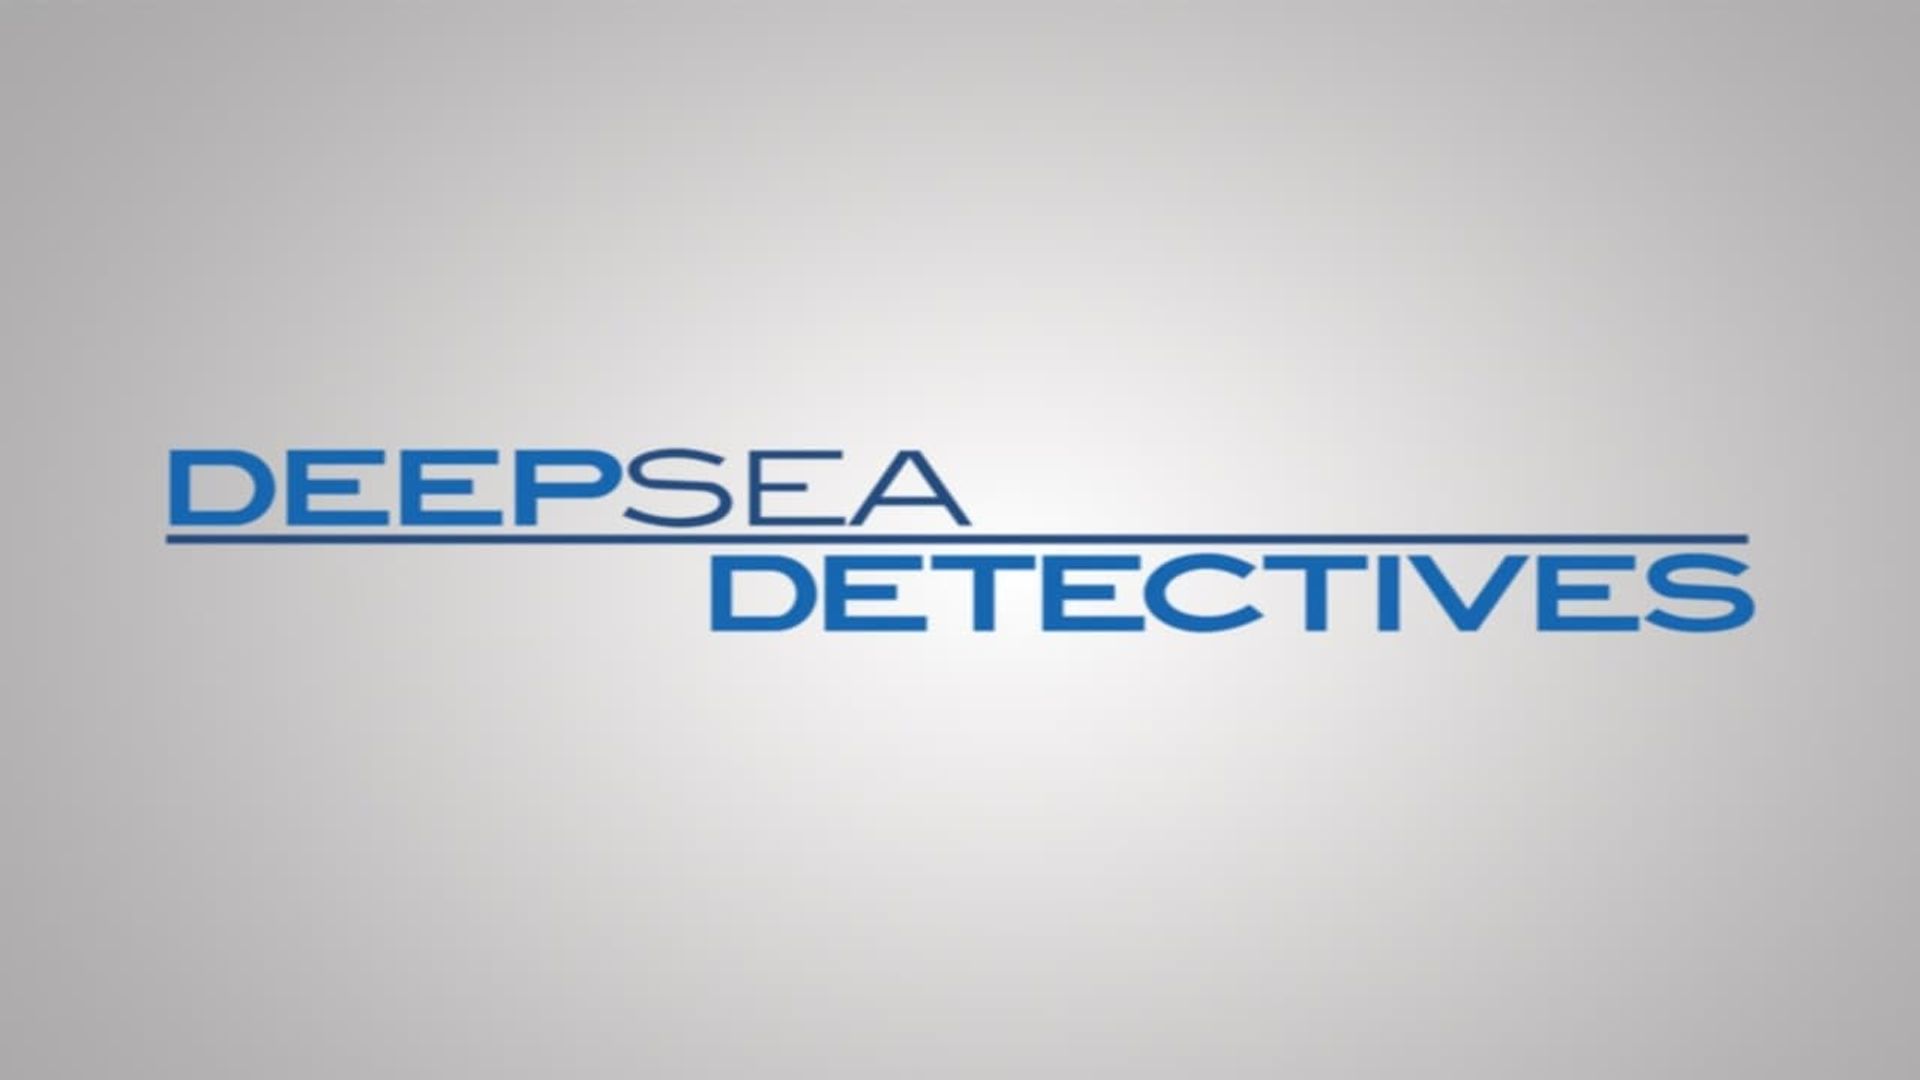 Deep Sea Detectives background